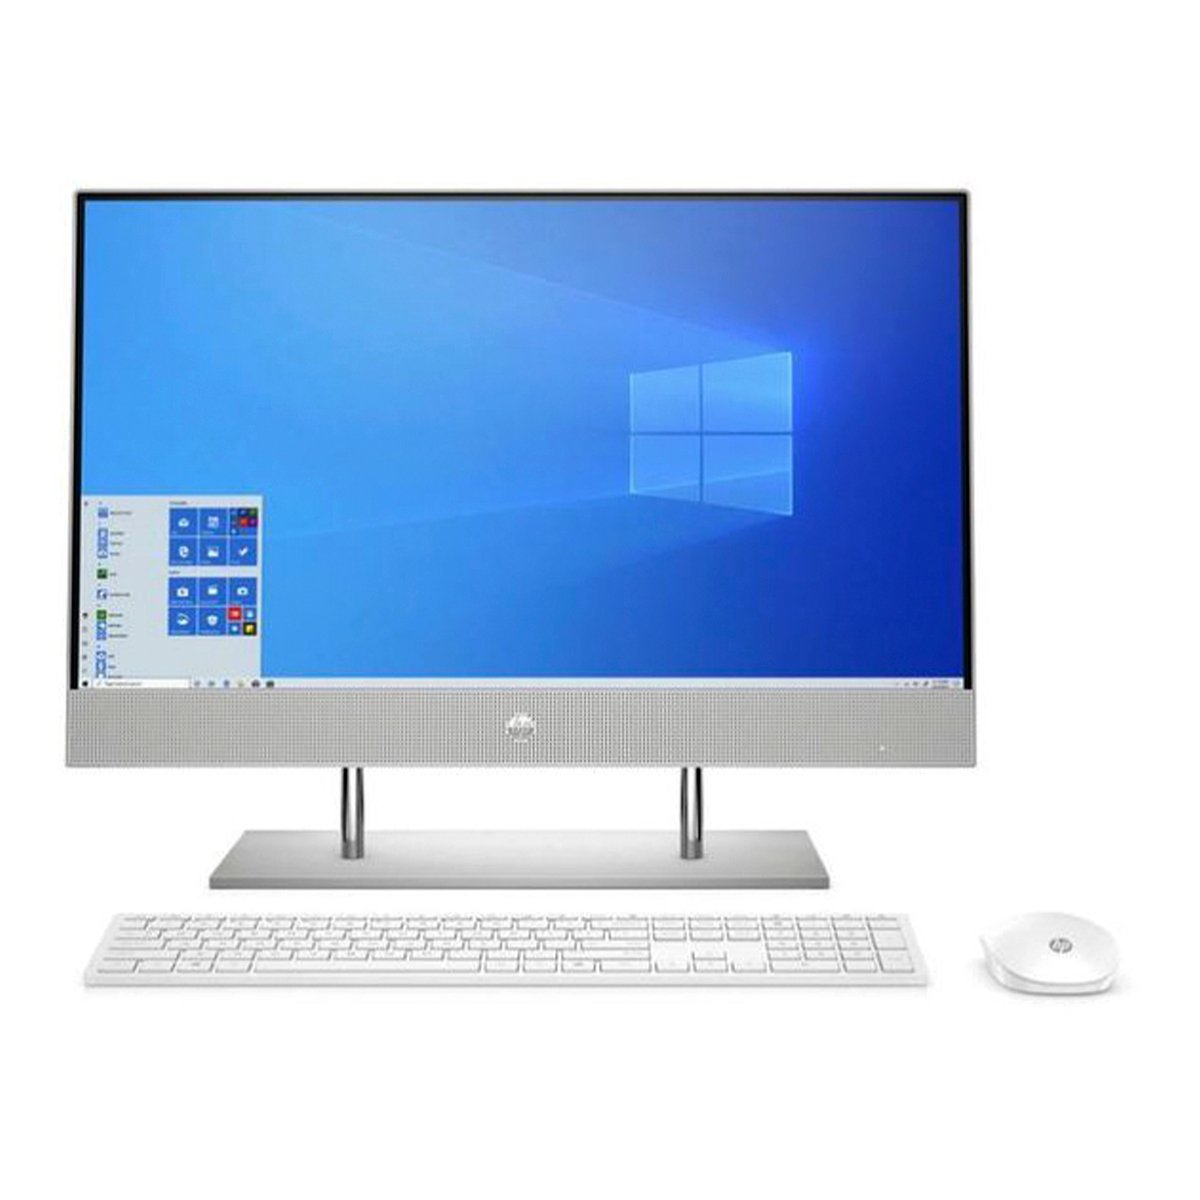 HP 24-DP001 All-in-One Pavilion Desktop(107J9EA#ABV),Core i5-1035G1,8GB,1TB HDD,256GB SSD,NVIDIA 2GB GDDR5, Windows 10,23.8 inch FHD,Silver